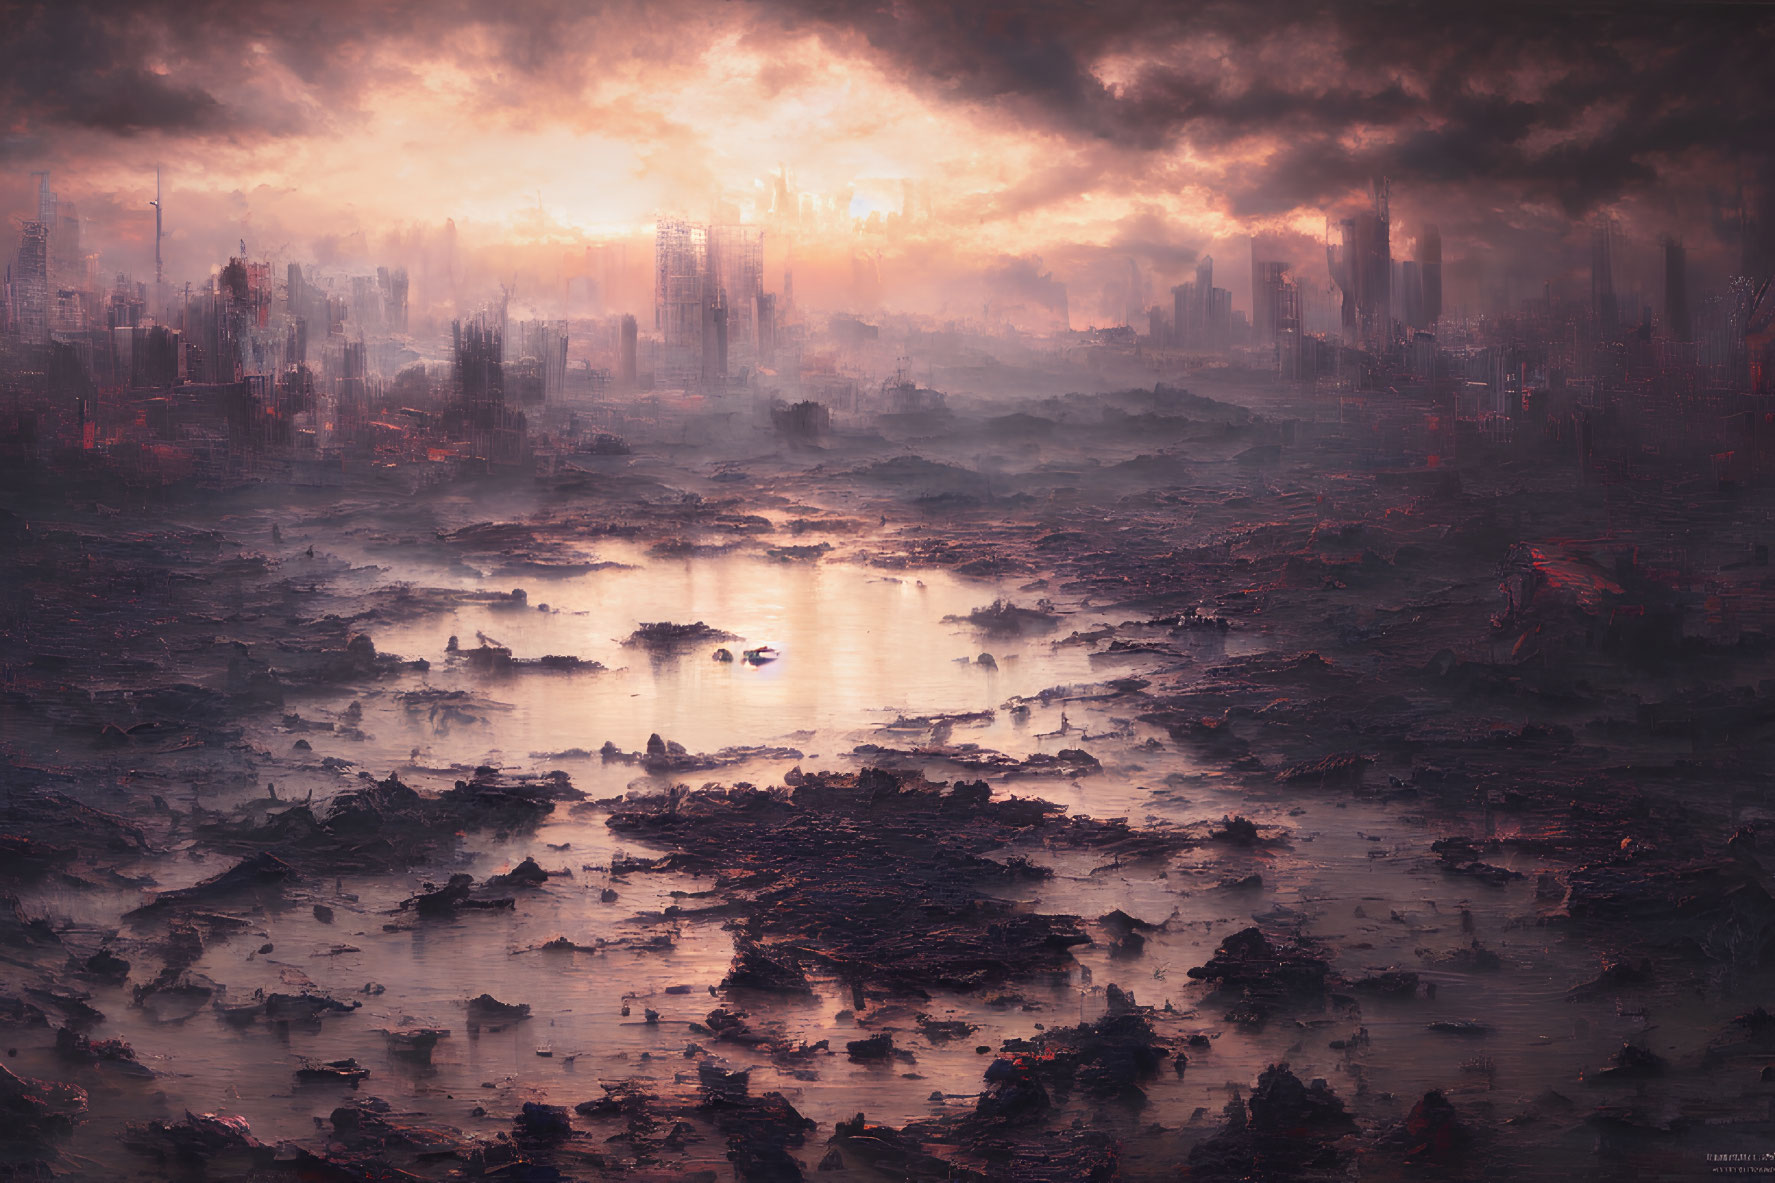 Dystopian landscape with sunlit smog-filled skyline, dilapidated buildings, dark debris.